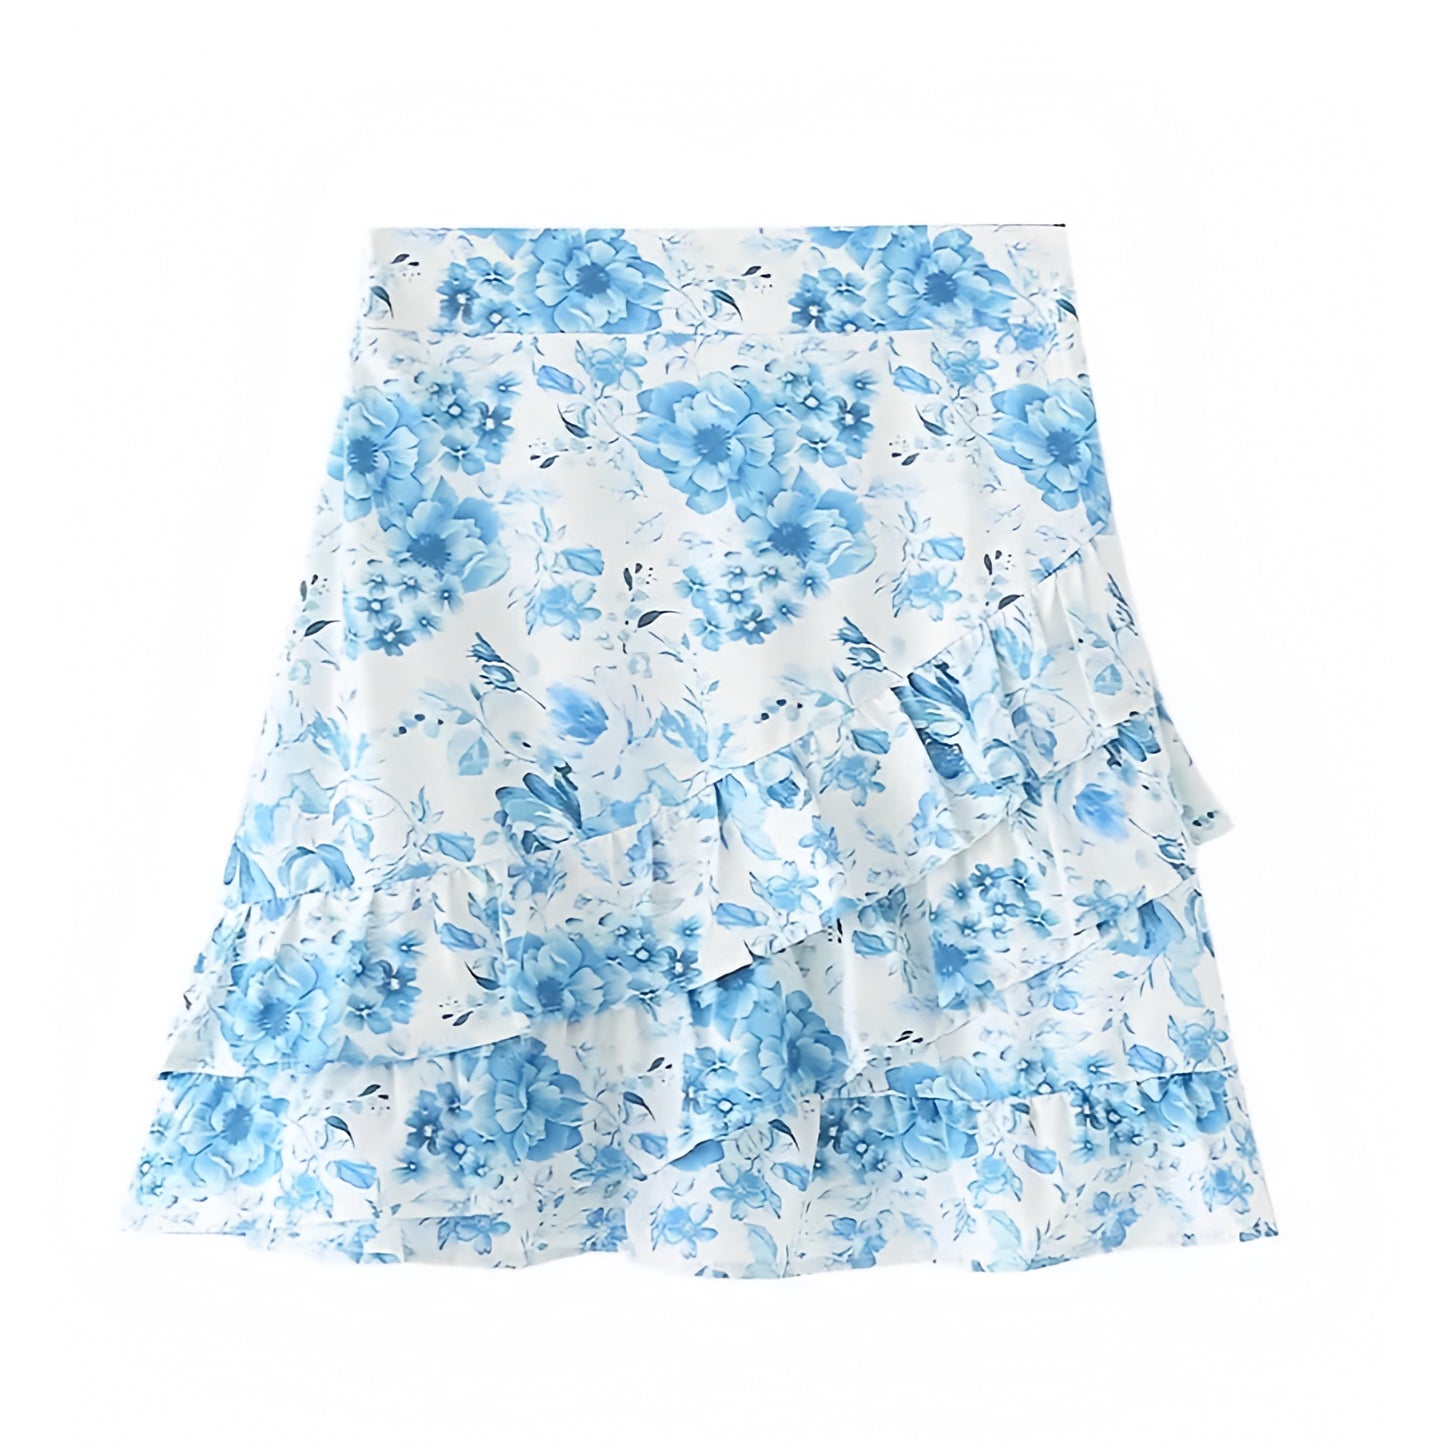 floral-print-light-blue-white-multi-color-flower-patterned-slim-fitted-waist-layered-ruffle-trim-fit-and-flare-mid-high-rise-waisted-drop-waist-tiered-linen-flowy-boho-bohemian-short-mini-skirt-skort-women-ladies-teens-tweens-chic-trendy-spring-2024-summer-elegant-casual-semi-formal-feminine-preppy-style-coastal-granddaughter-grandmillennial-beach-wear-vacation-skirts-altard-state-zara-revolve-loveshackfancy-subdued-dupe